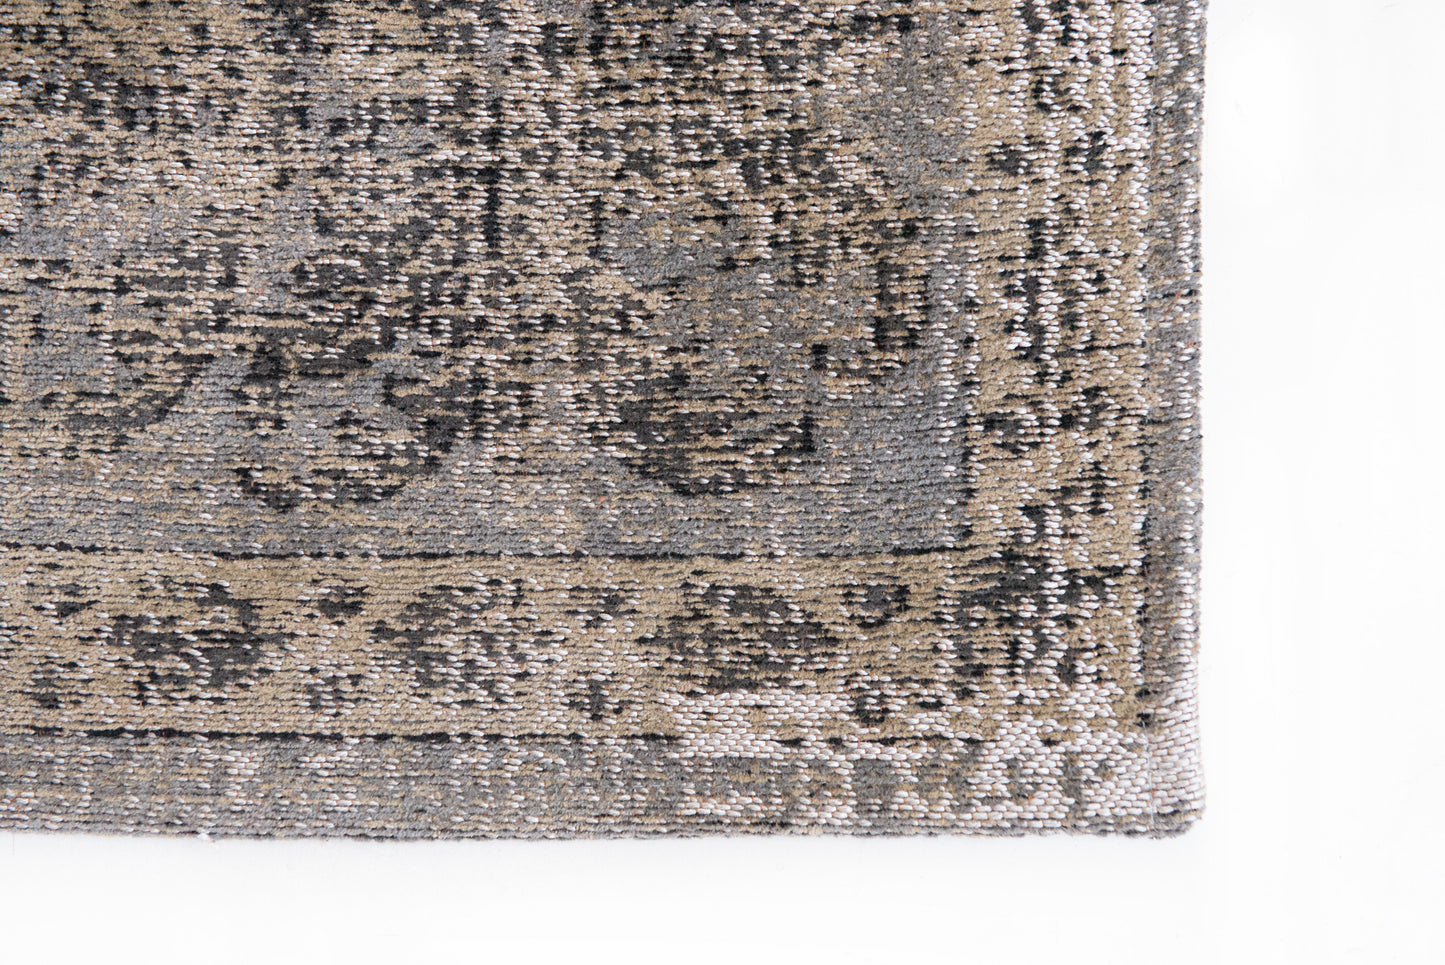 DAM-301: Jacquard carpet